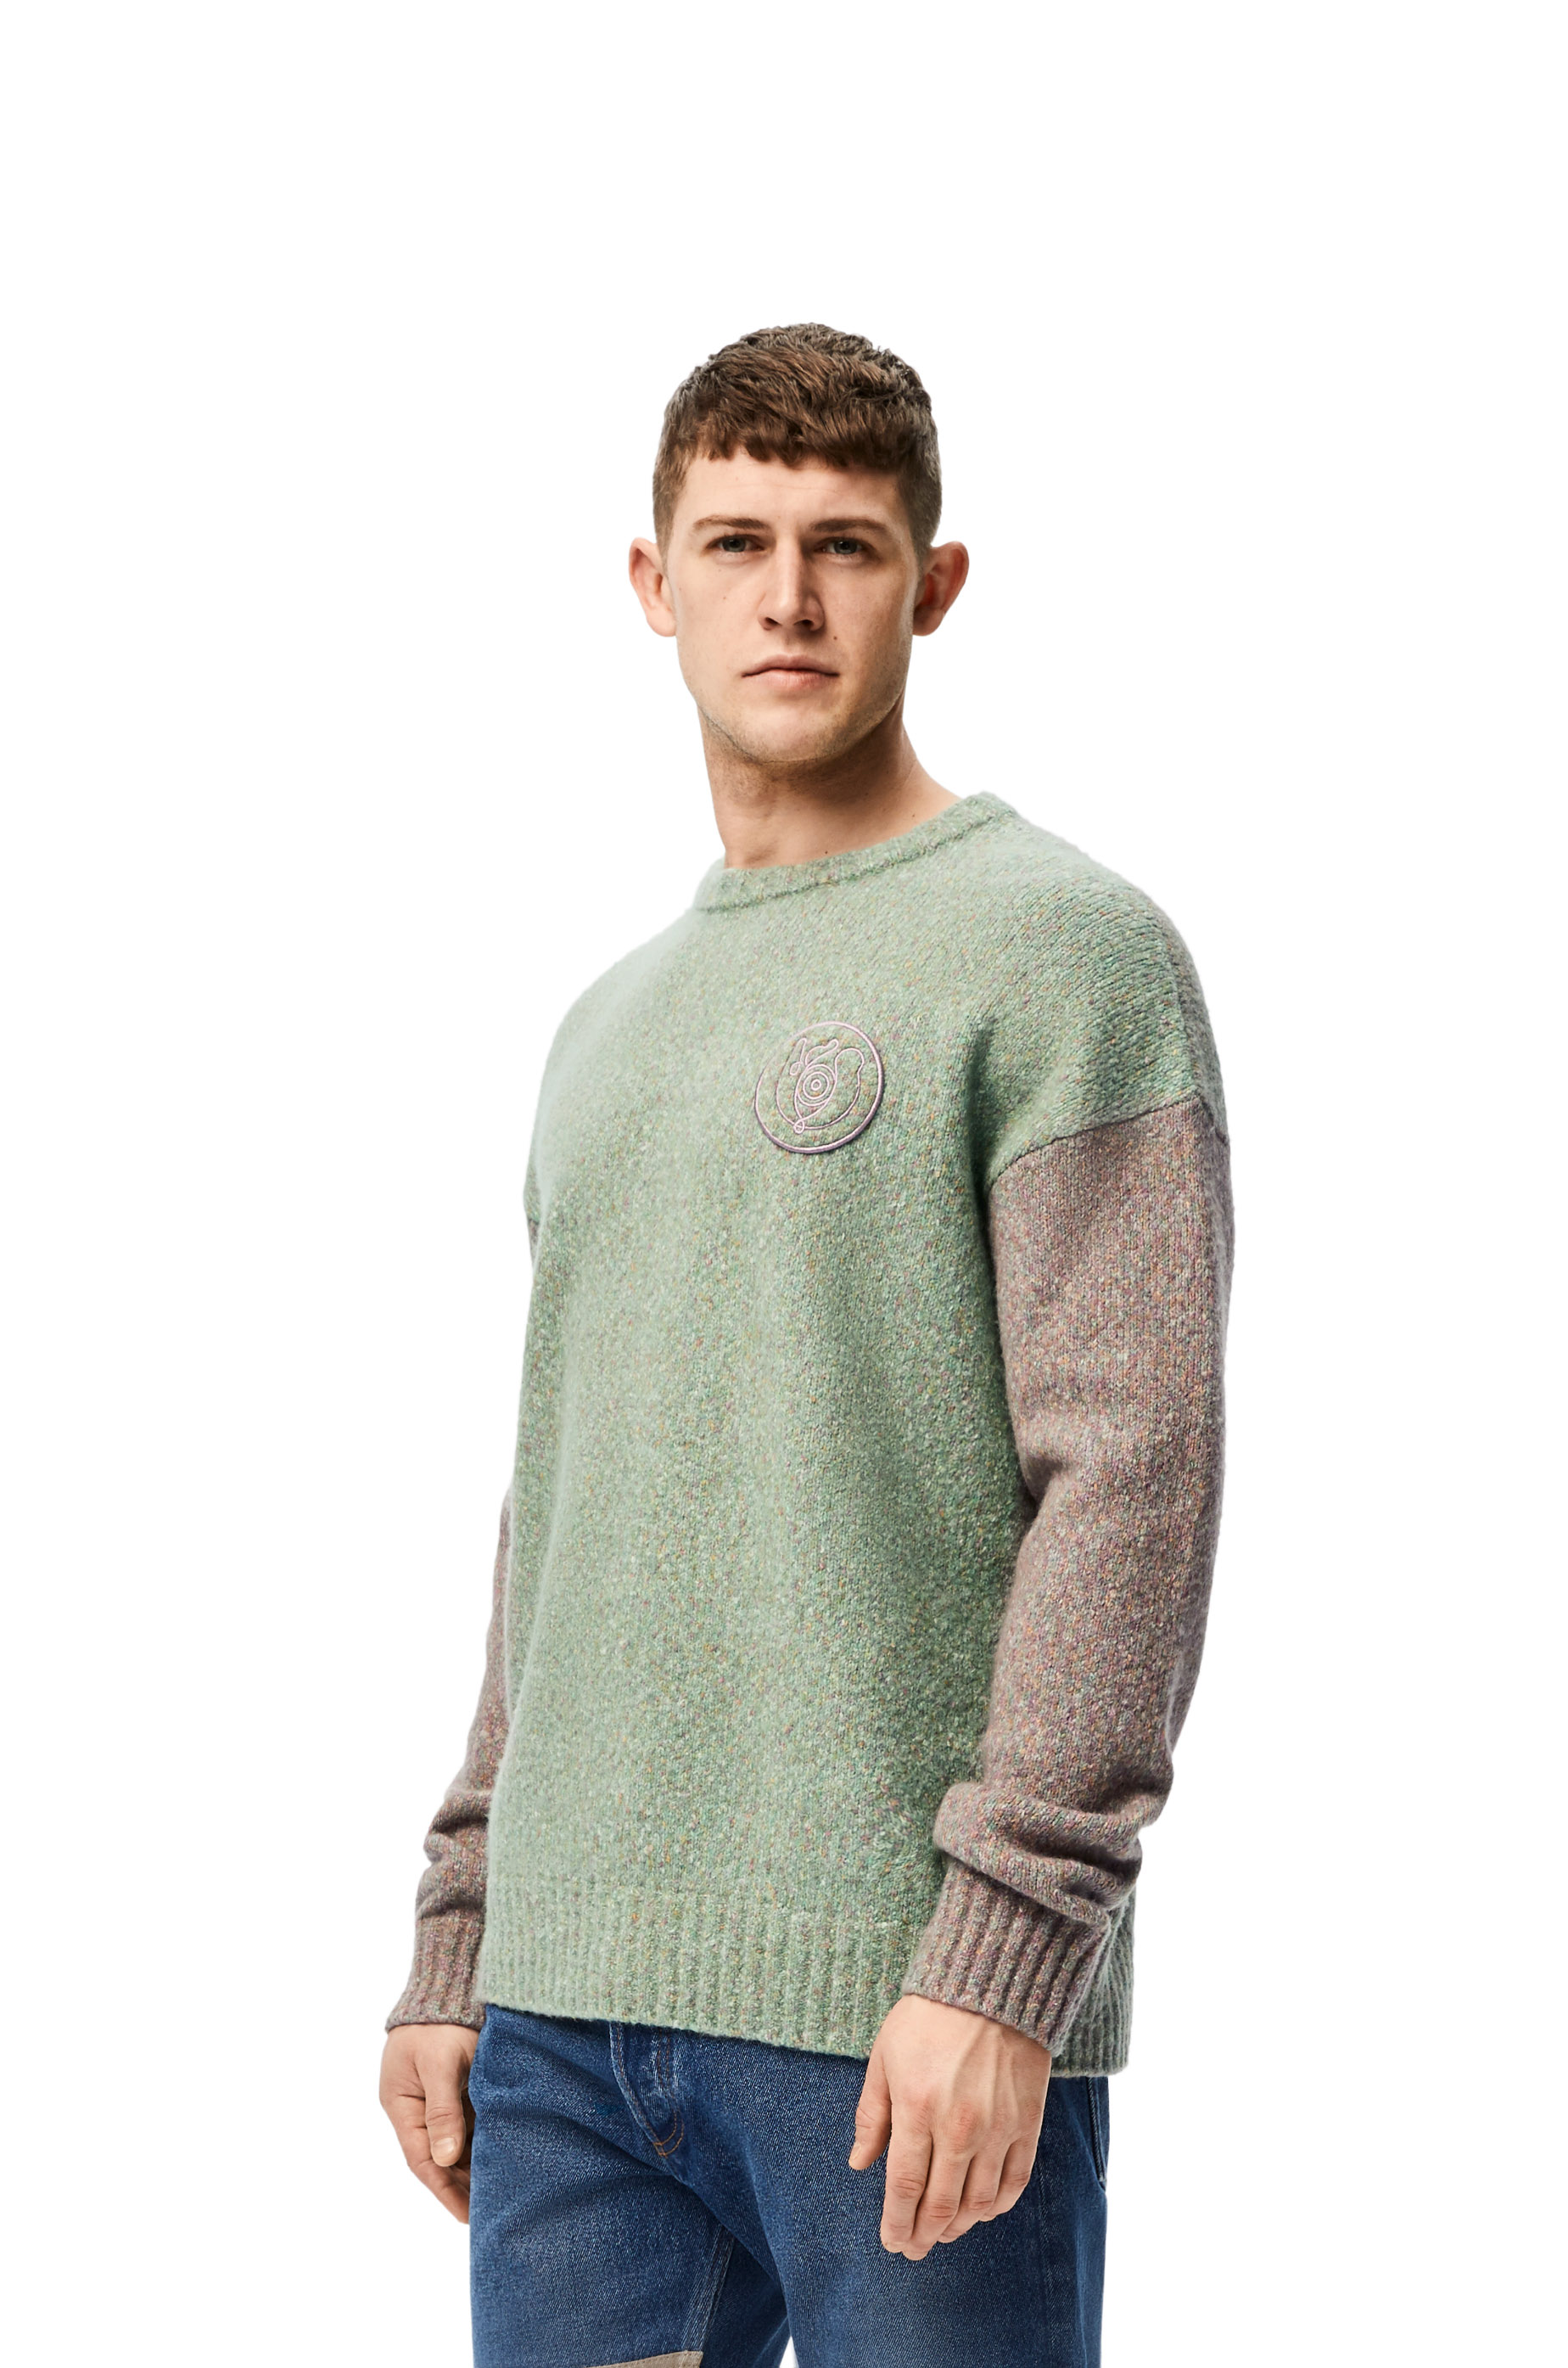 loewe men's sweater